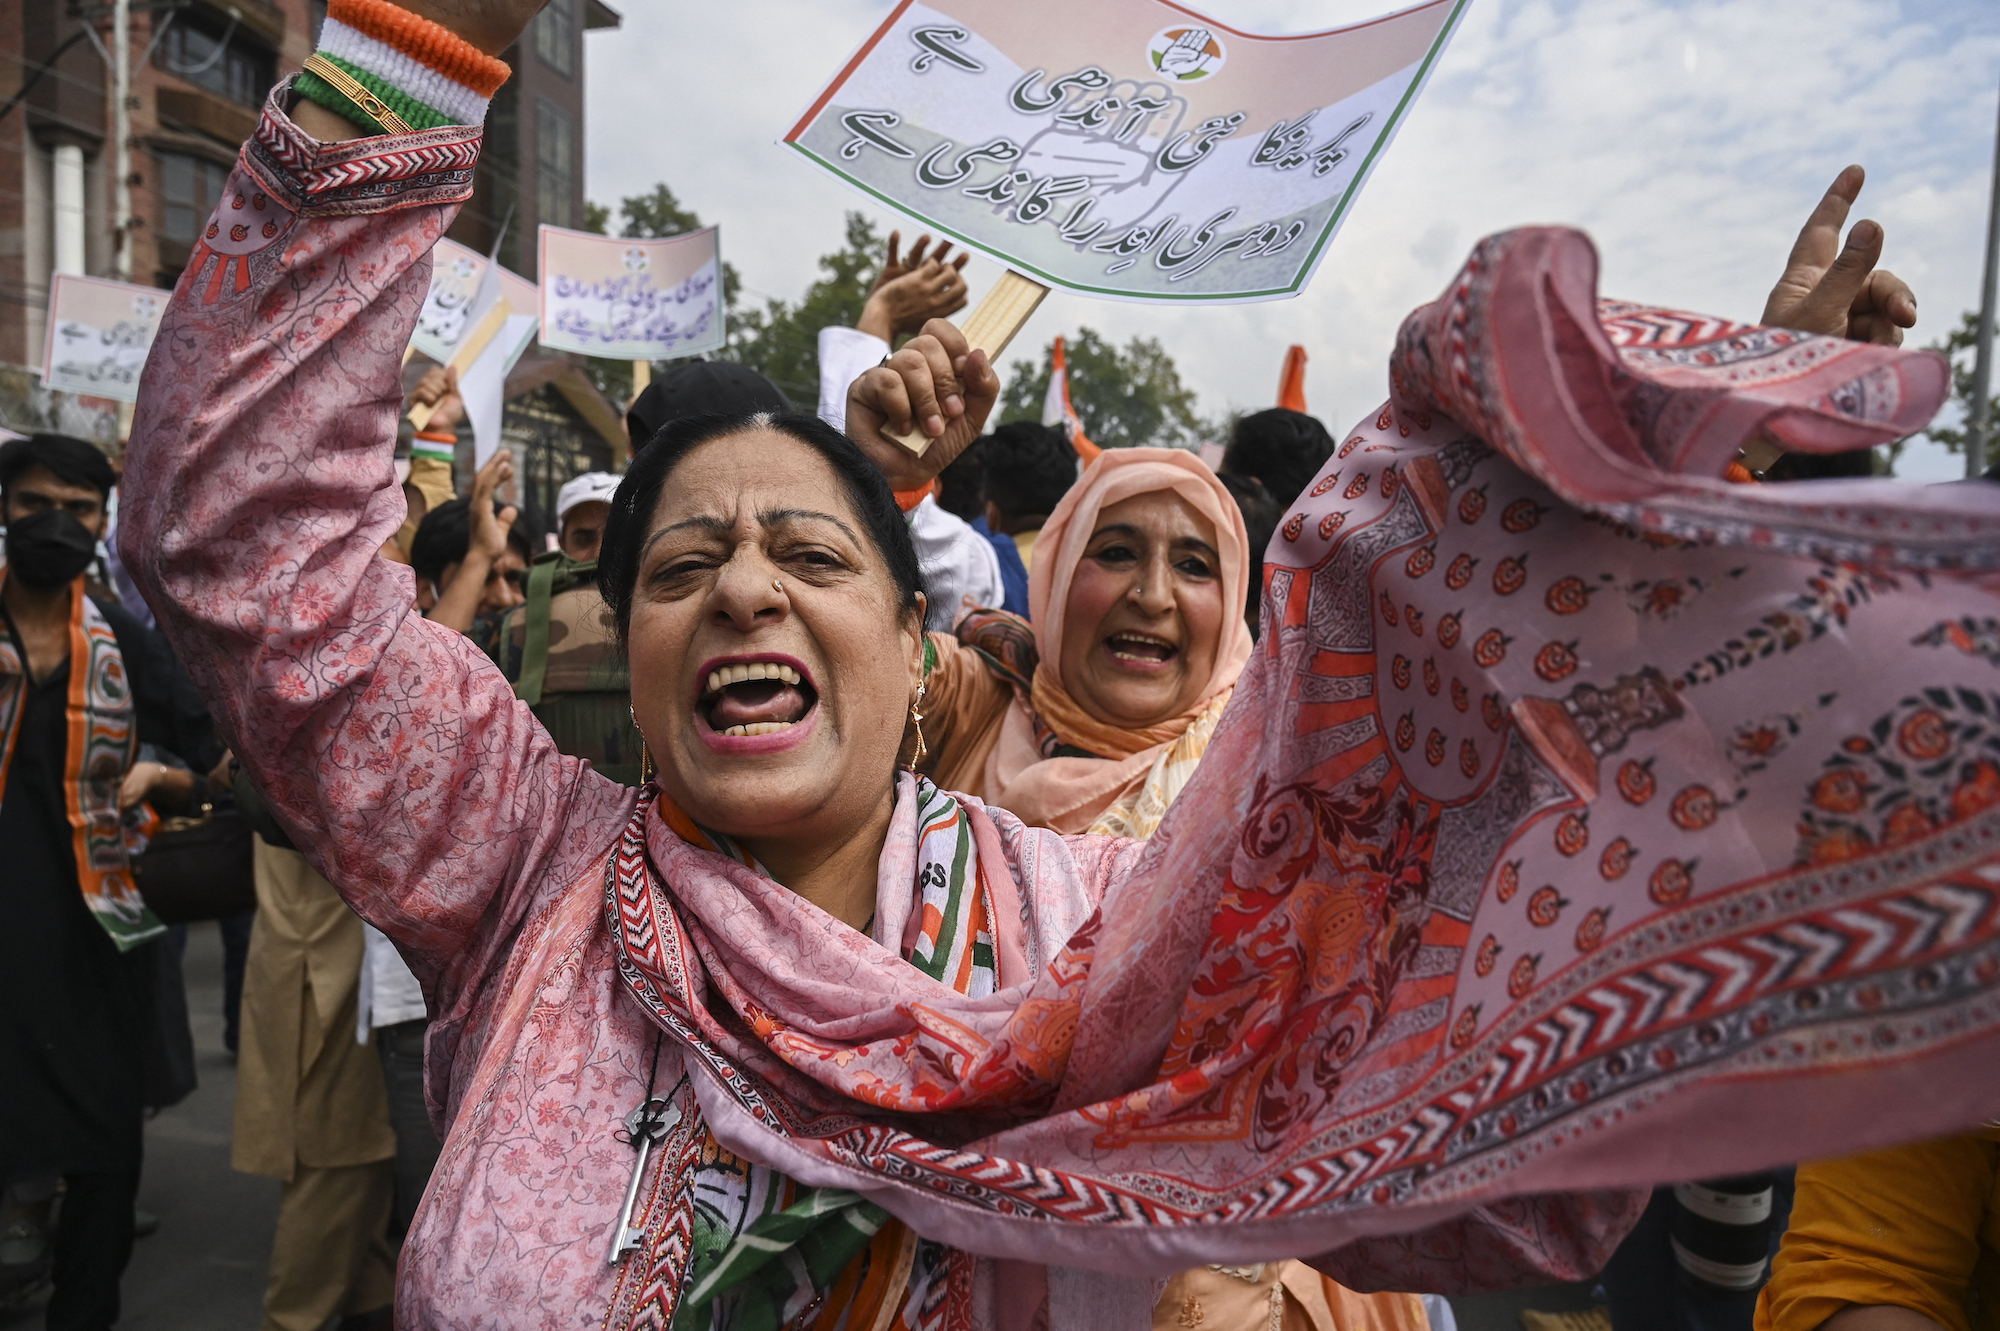 Women striking in India